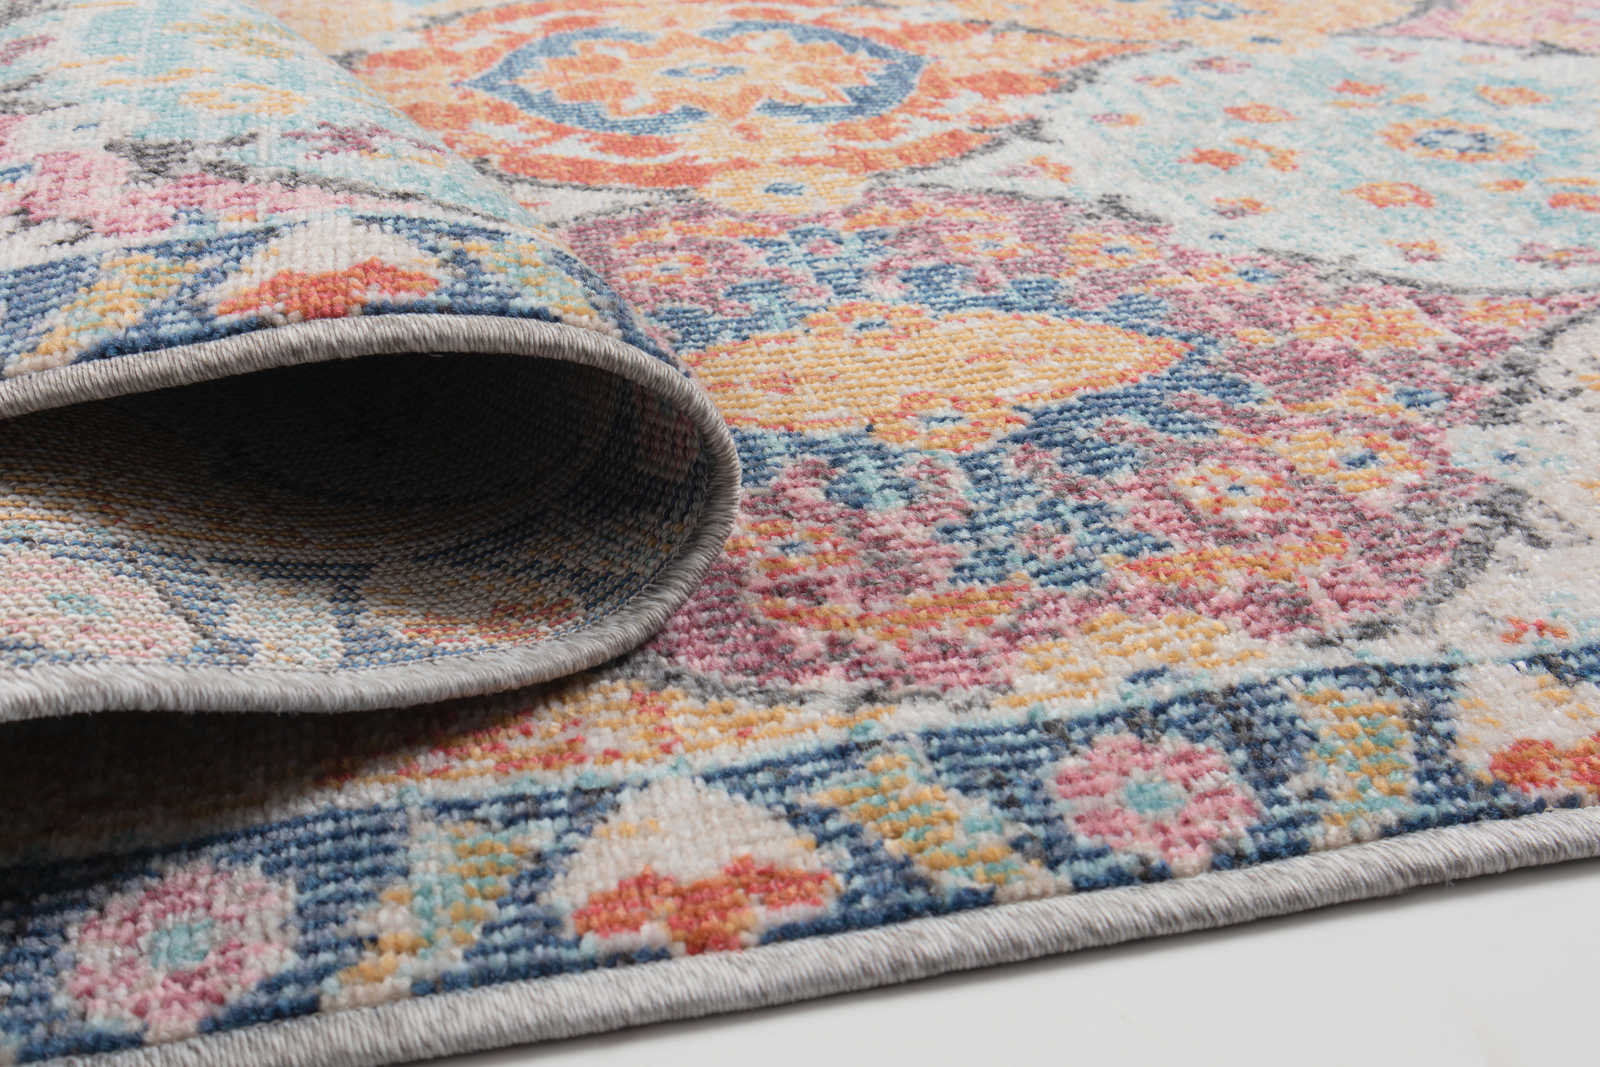             Bunter Outdoor Teppich aus Flachgewebe – 200 x 140 cm
        